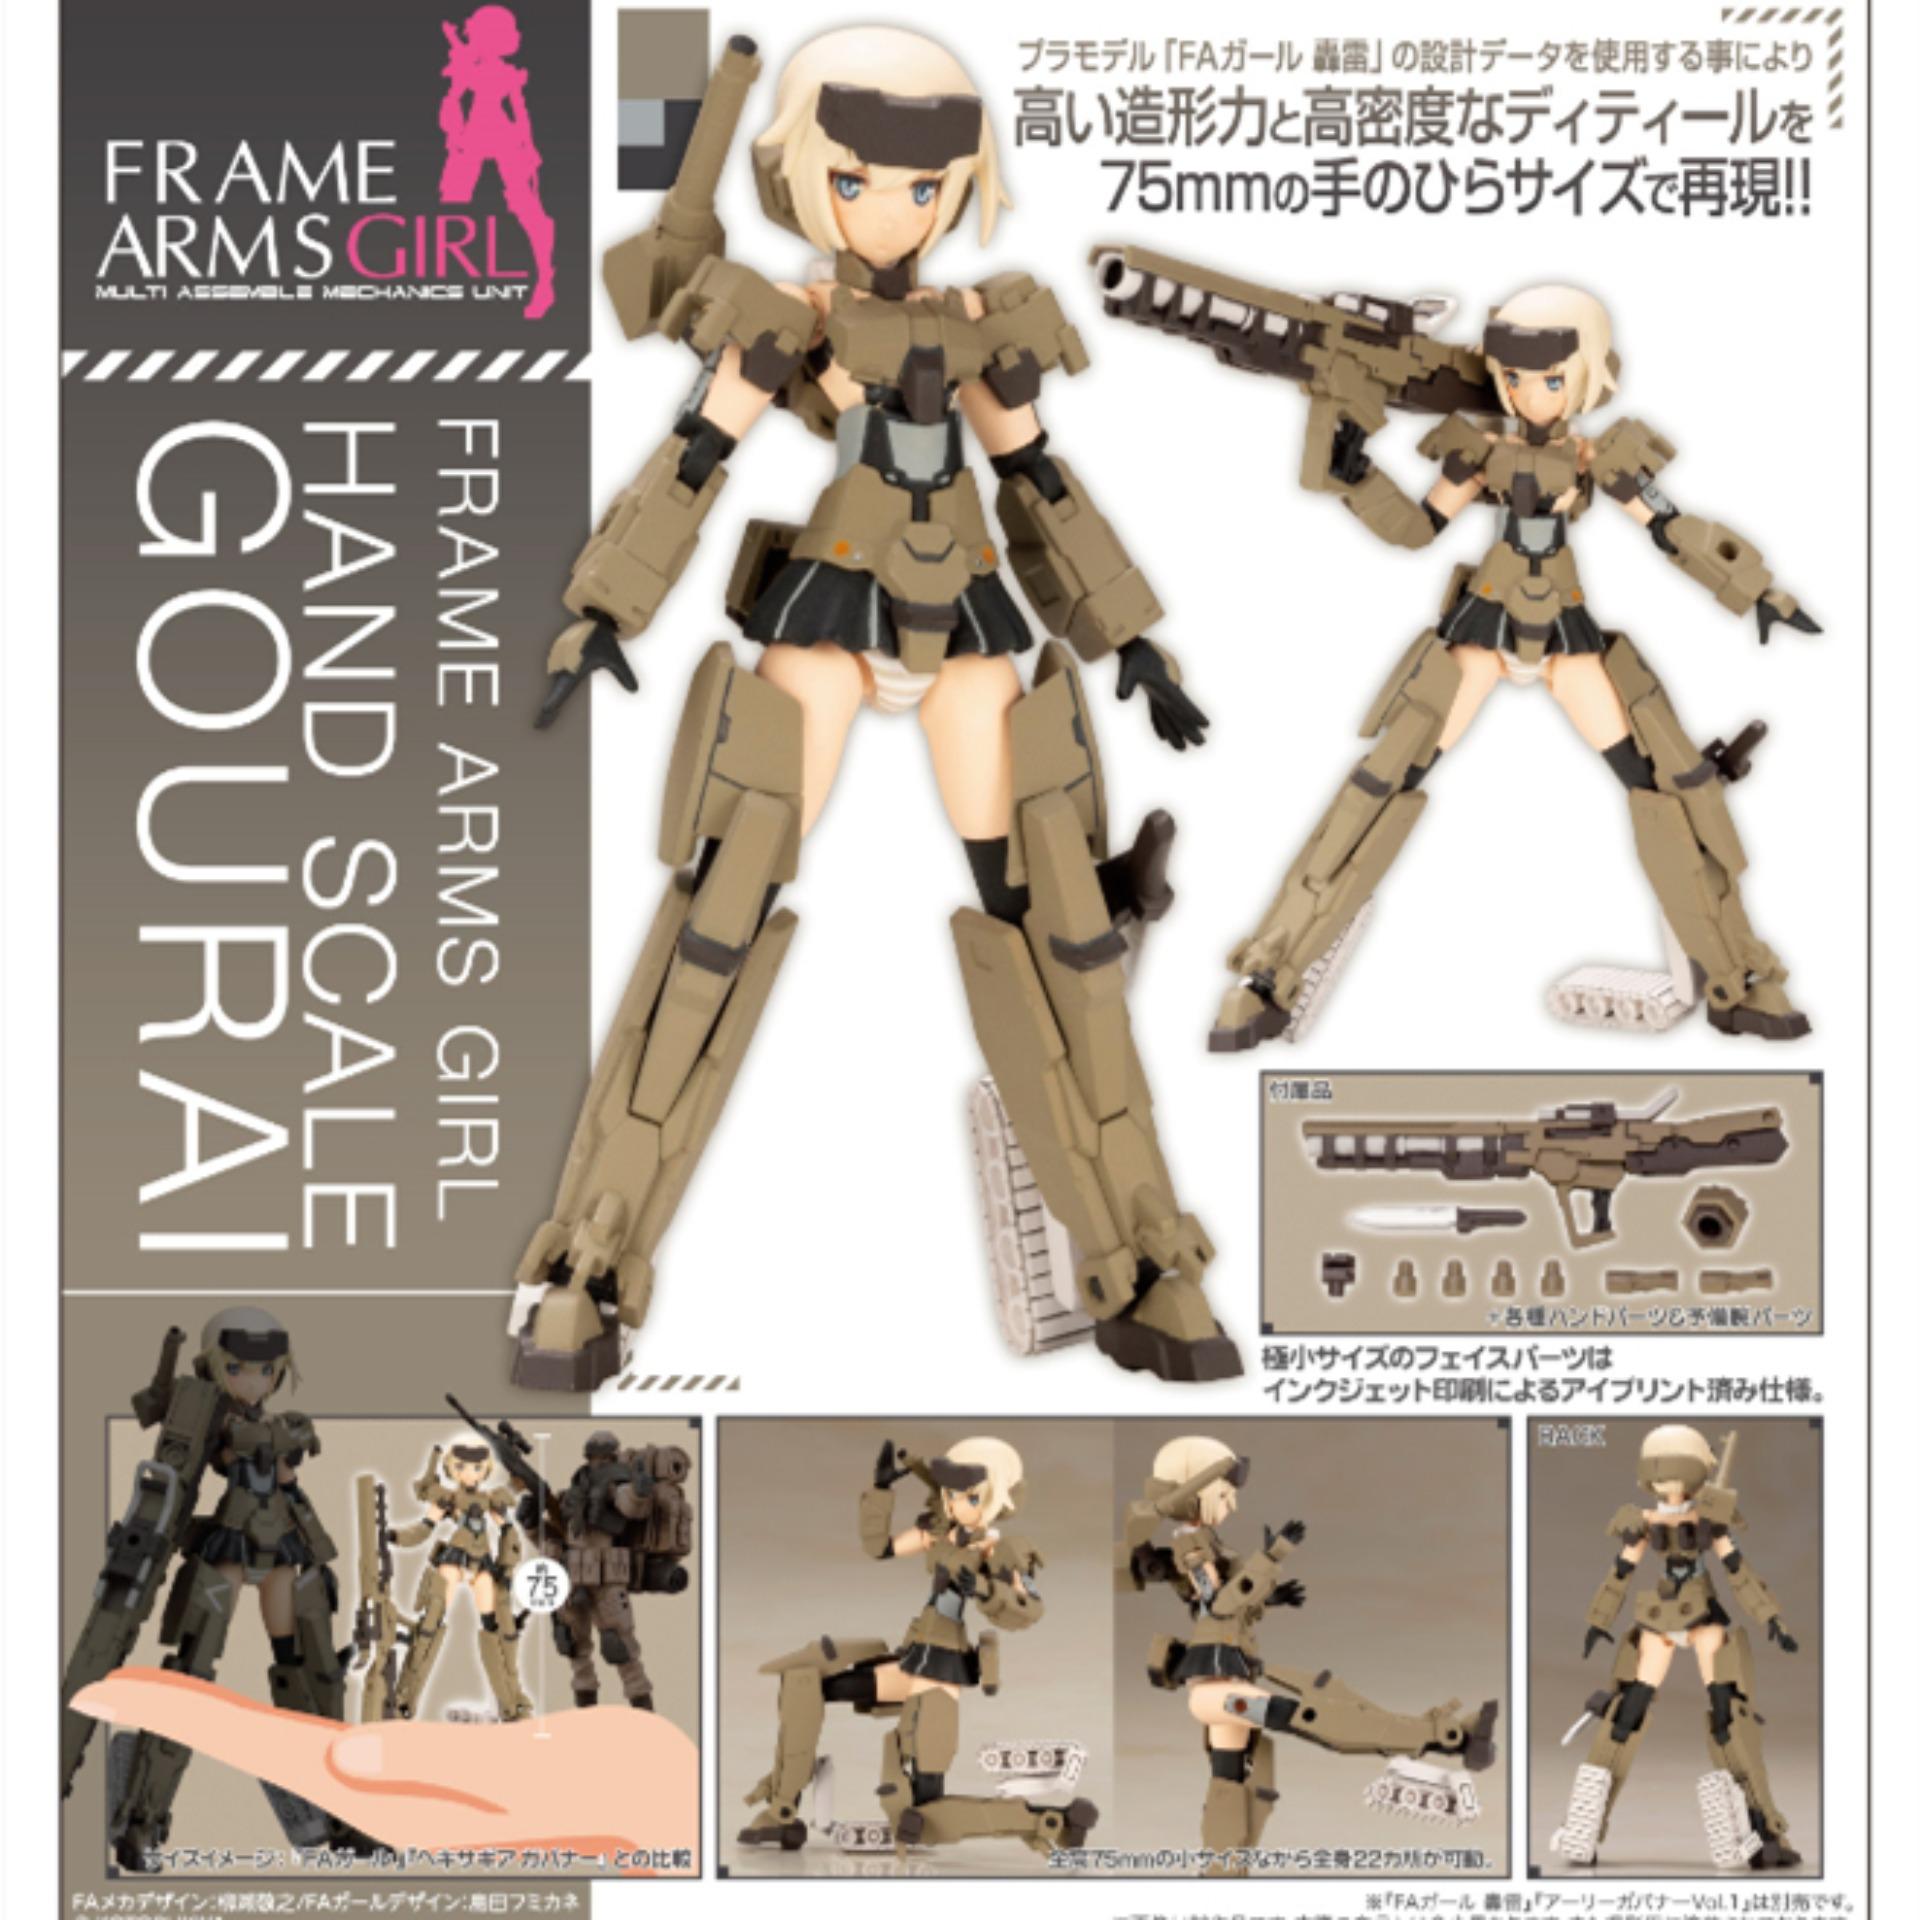 Model โมเดล งานแท้ 100tion Kotobukiya Frame Arms Girl Gourai Kai Ver Figma ฟิกม่า Anime ขยับแขน-ขาได้ ของขวัญ Gift ของสะสมหายาก อนิเมะ การ์ตูน มังงะ Doll ตุ๊กตา สั่งและนำเข้าจากญี่ปุ่น manga Figure ฟิกเกอร์